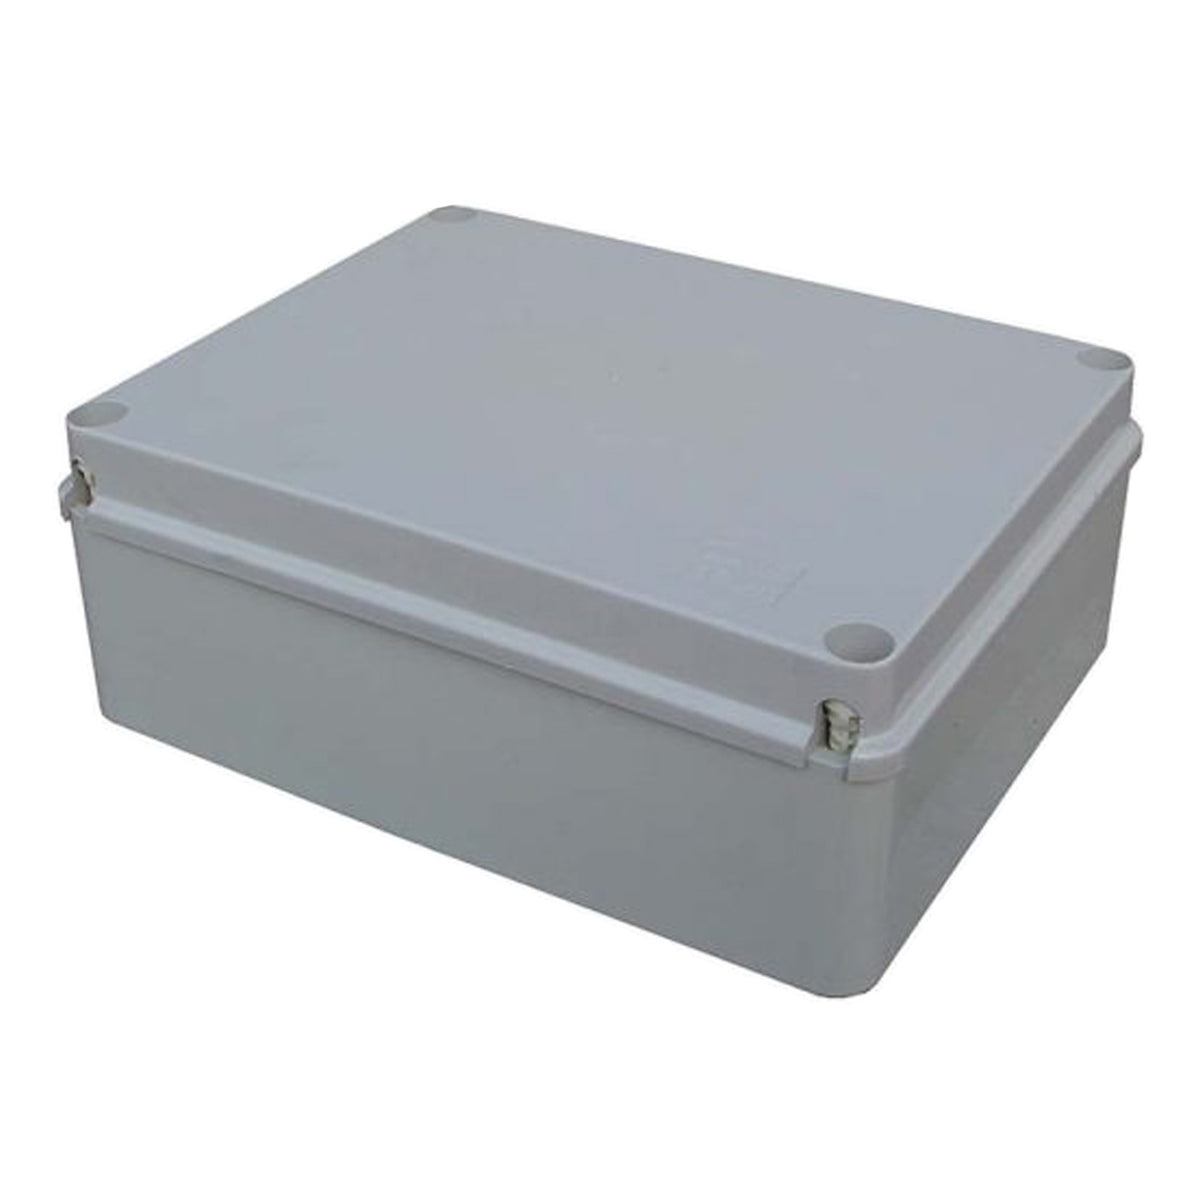 ESR B300 Waterproof Junction Box 300 x 220 x 120mm IP56 PVC